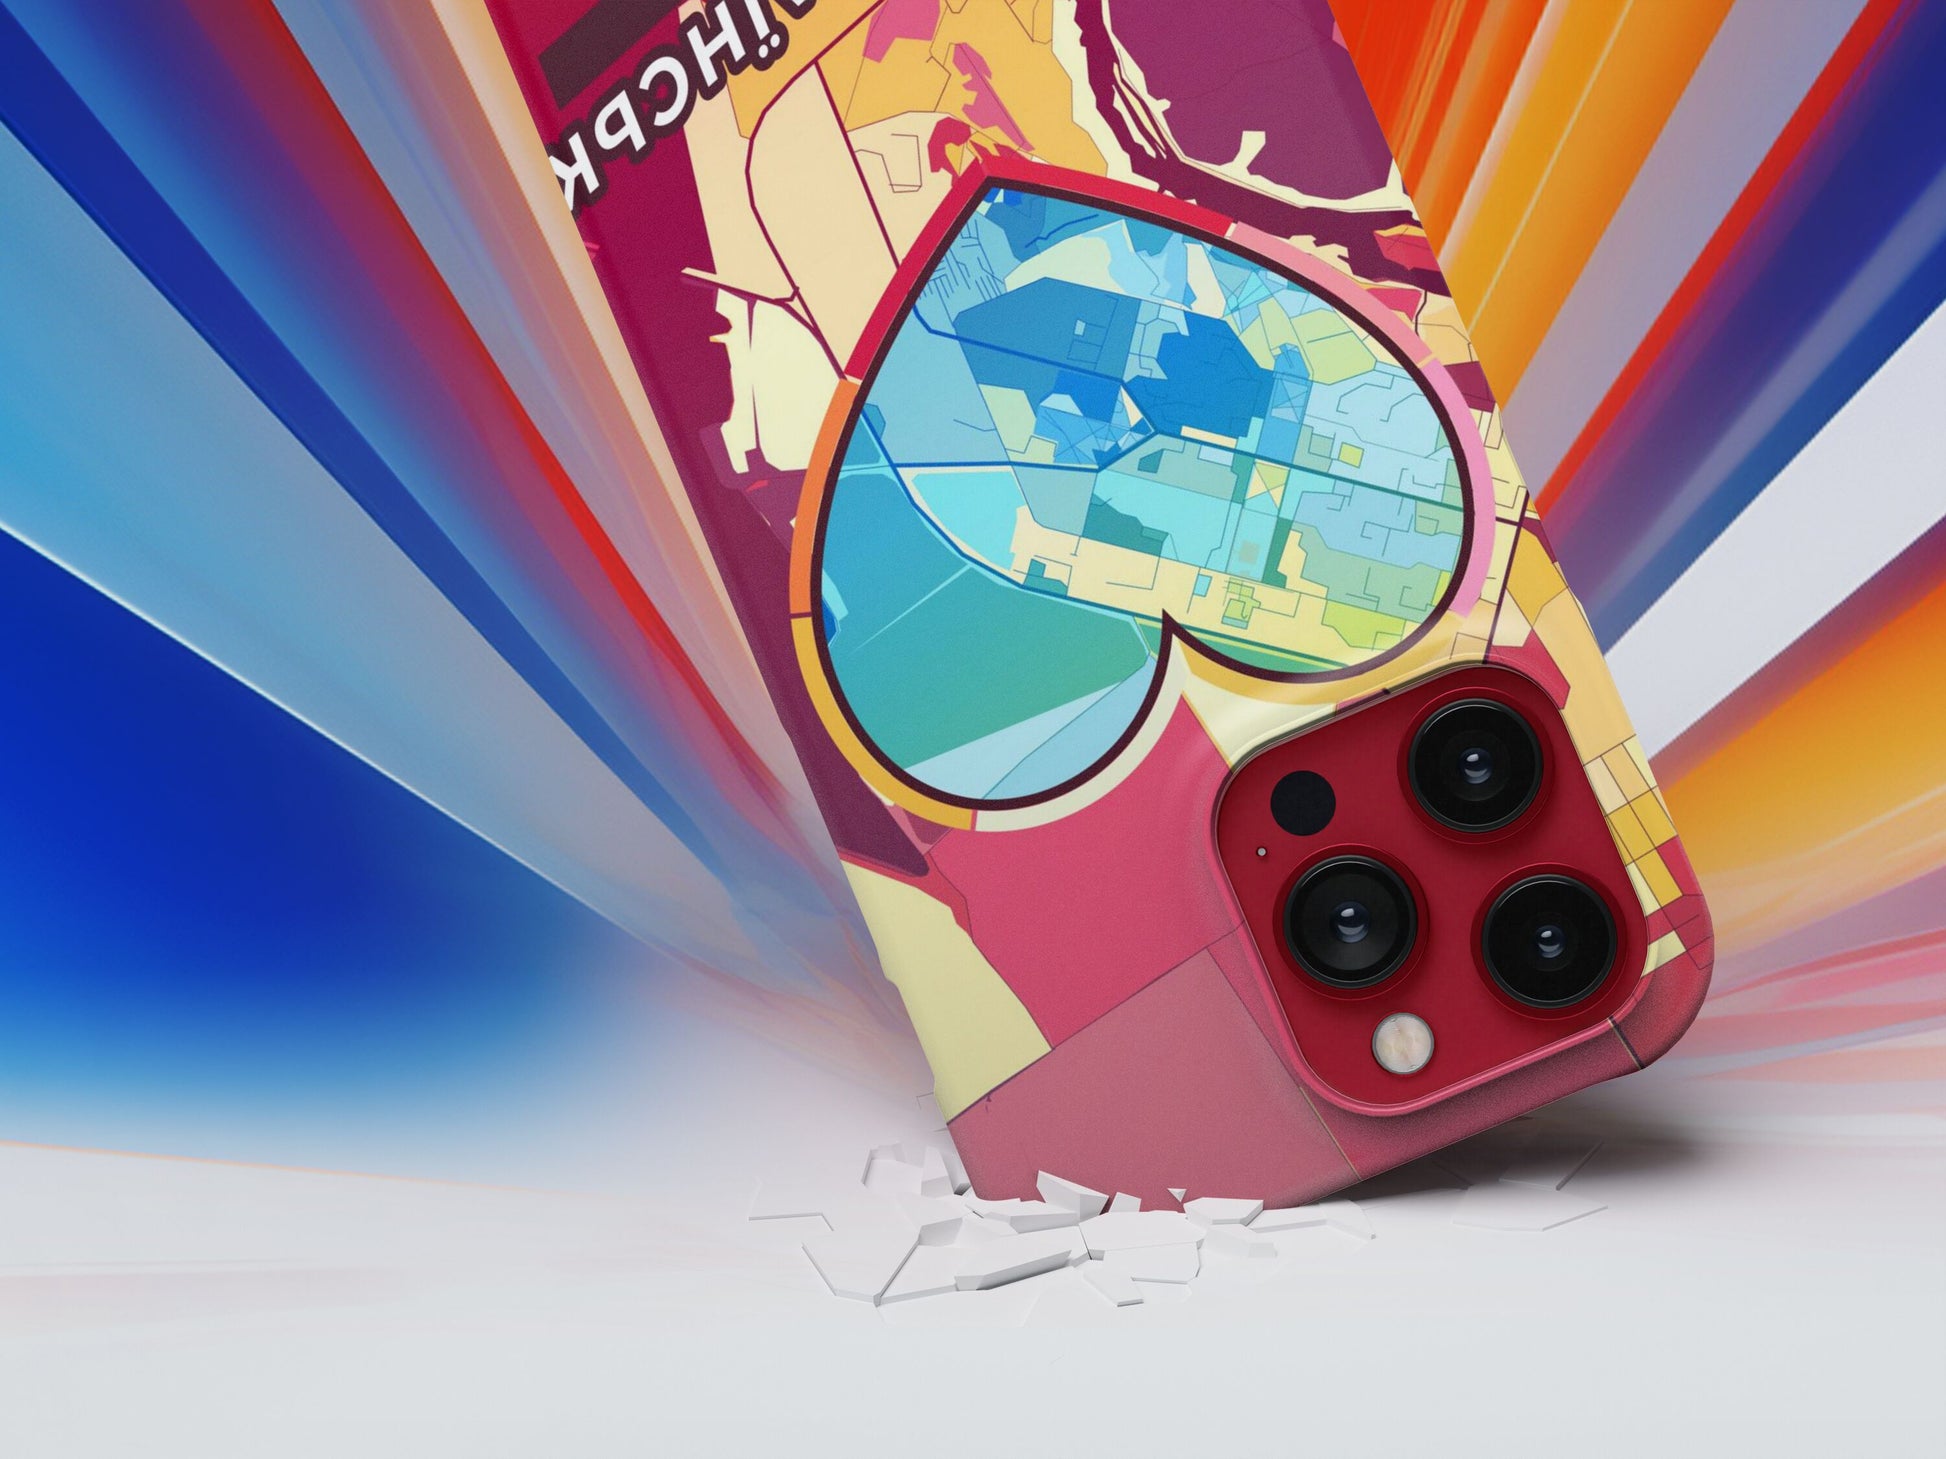 Yuzhnoukrainsk Ukraine slim phone case with colorful icon